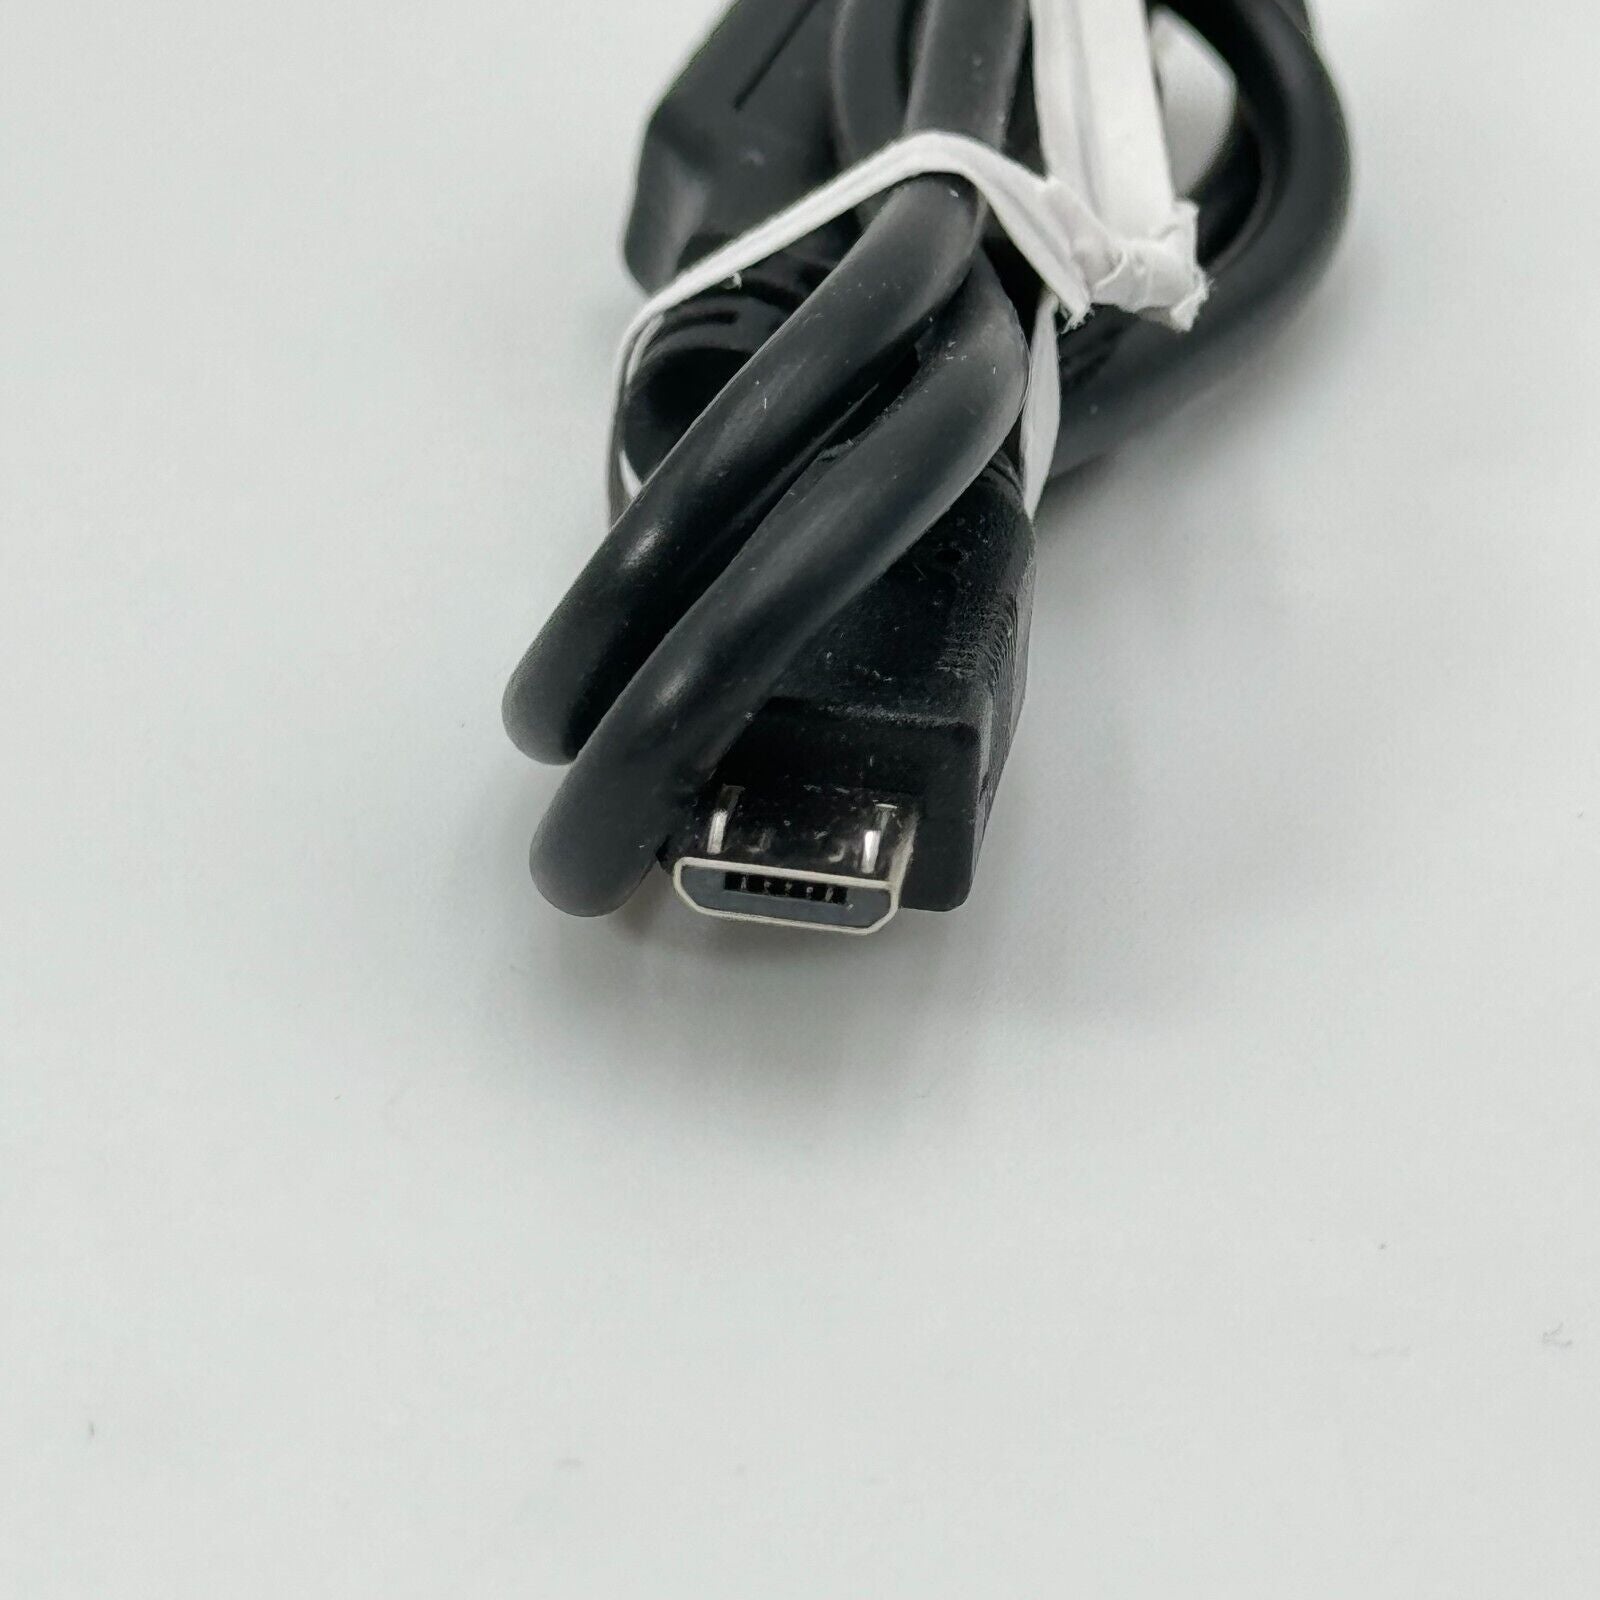 Zgear Lightweight & Compact Power Bank 2600 mAh Phone Charge Blue Micro USB Cord